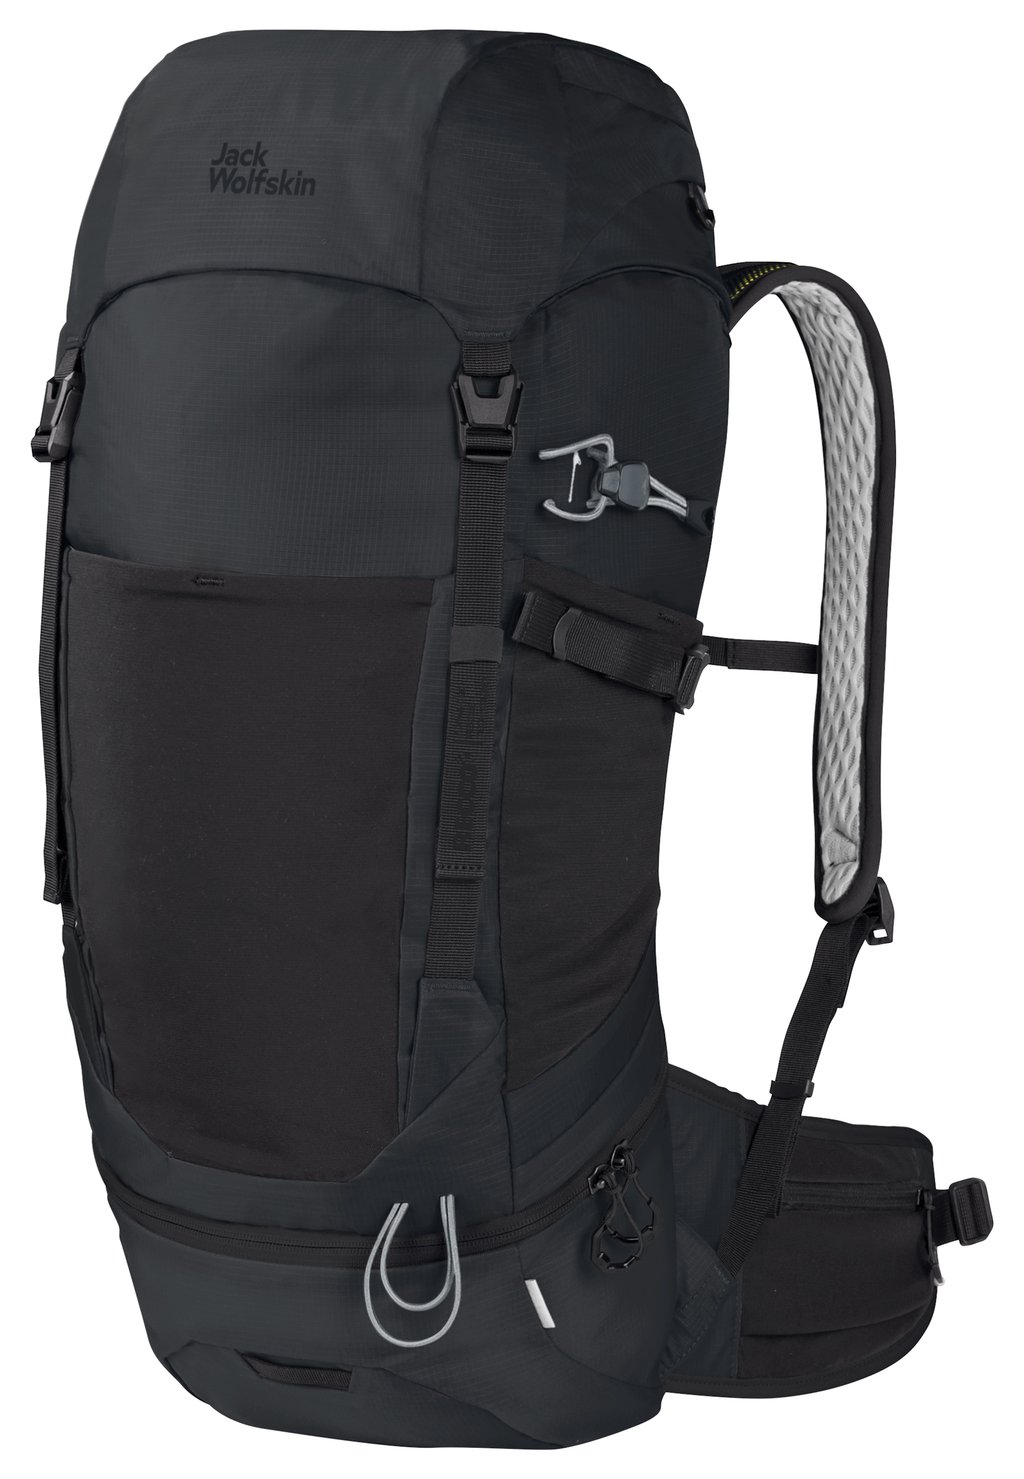 Рюкзак для путешествий Jack Wolfskin Wolftrail 28 Recco, черный рюкзак jack wolfskin kingston 30 pack recco